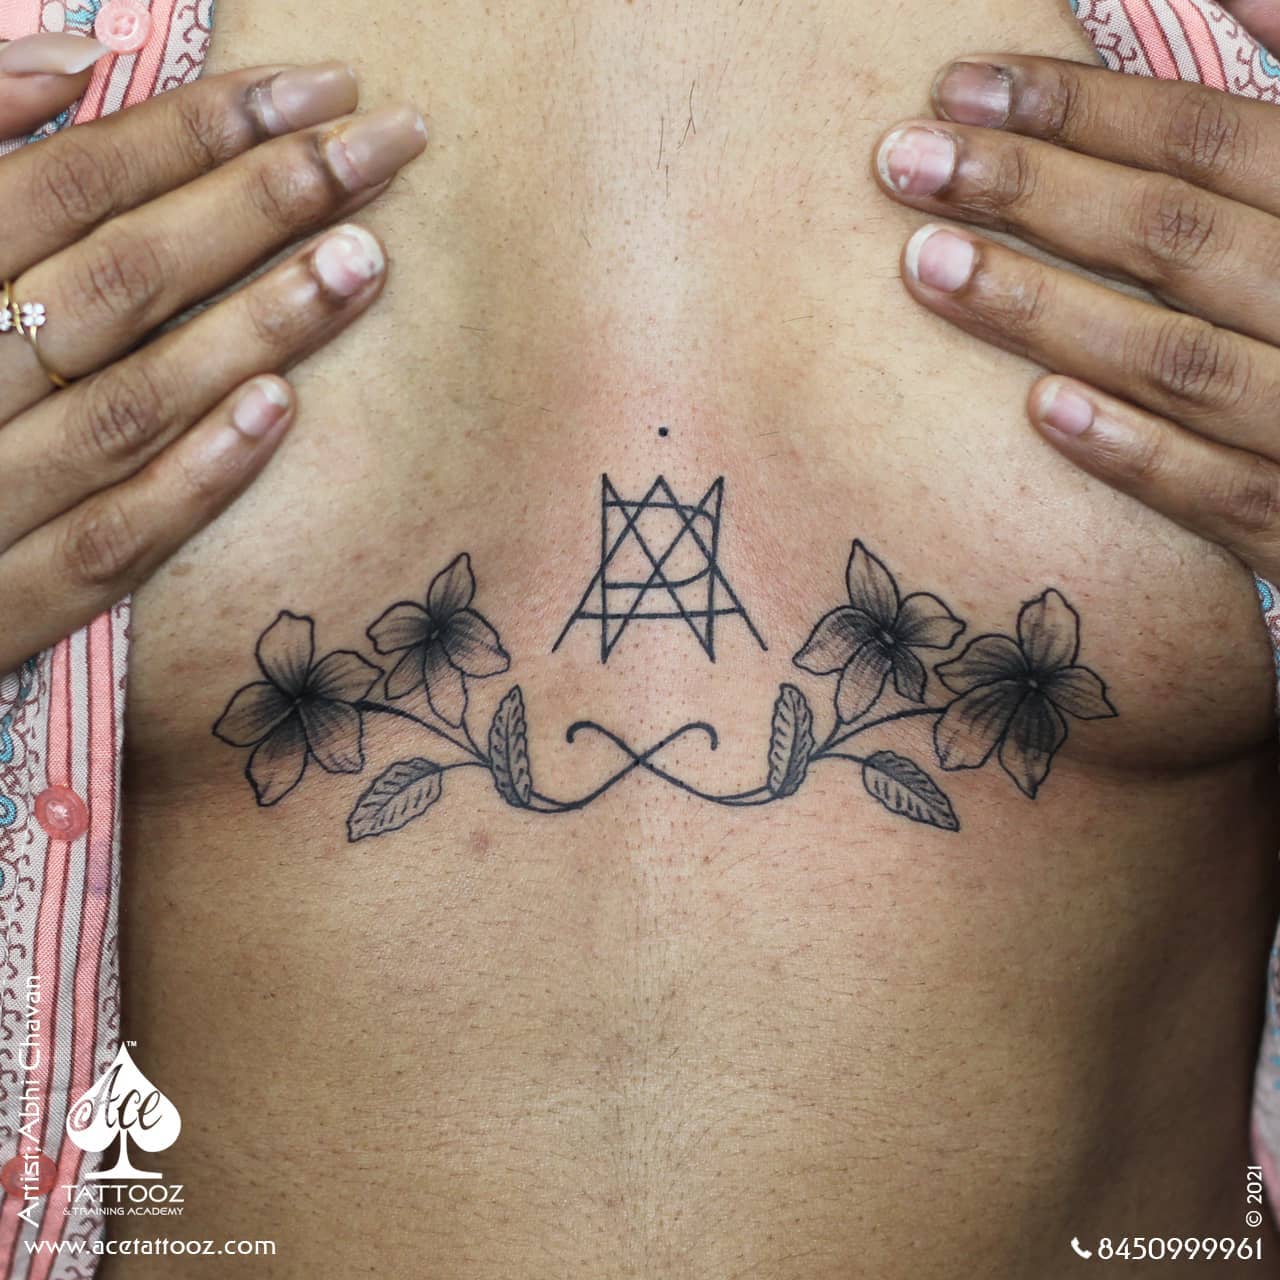 Sternum floral tattoo ✨ Done by @abhiacetattooz at @acetattooz ✅
.
.
#acetattoo #acetattoozindia #Acetattooz #Artist #tattoolife #tattoolovers #Tattoo #Acetattooz #tattooz #indianartist #sternum #sternumtattoo #tattooink #tattoolifestyle #tattoostudio #artlovers